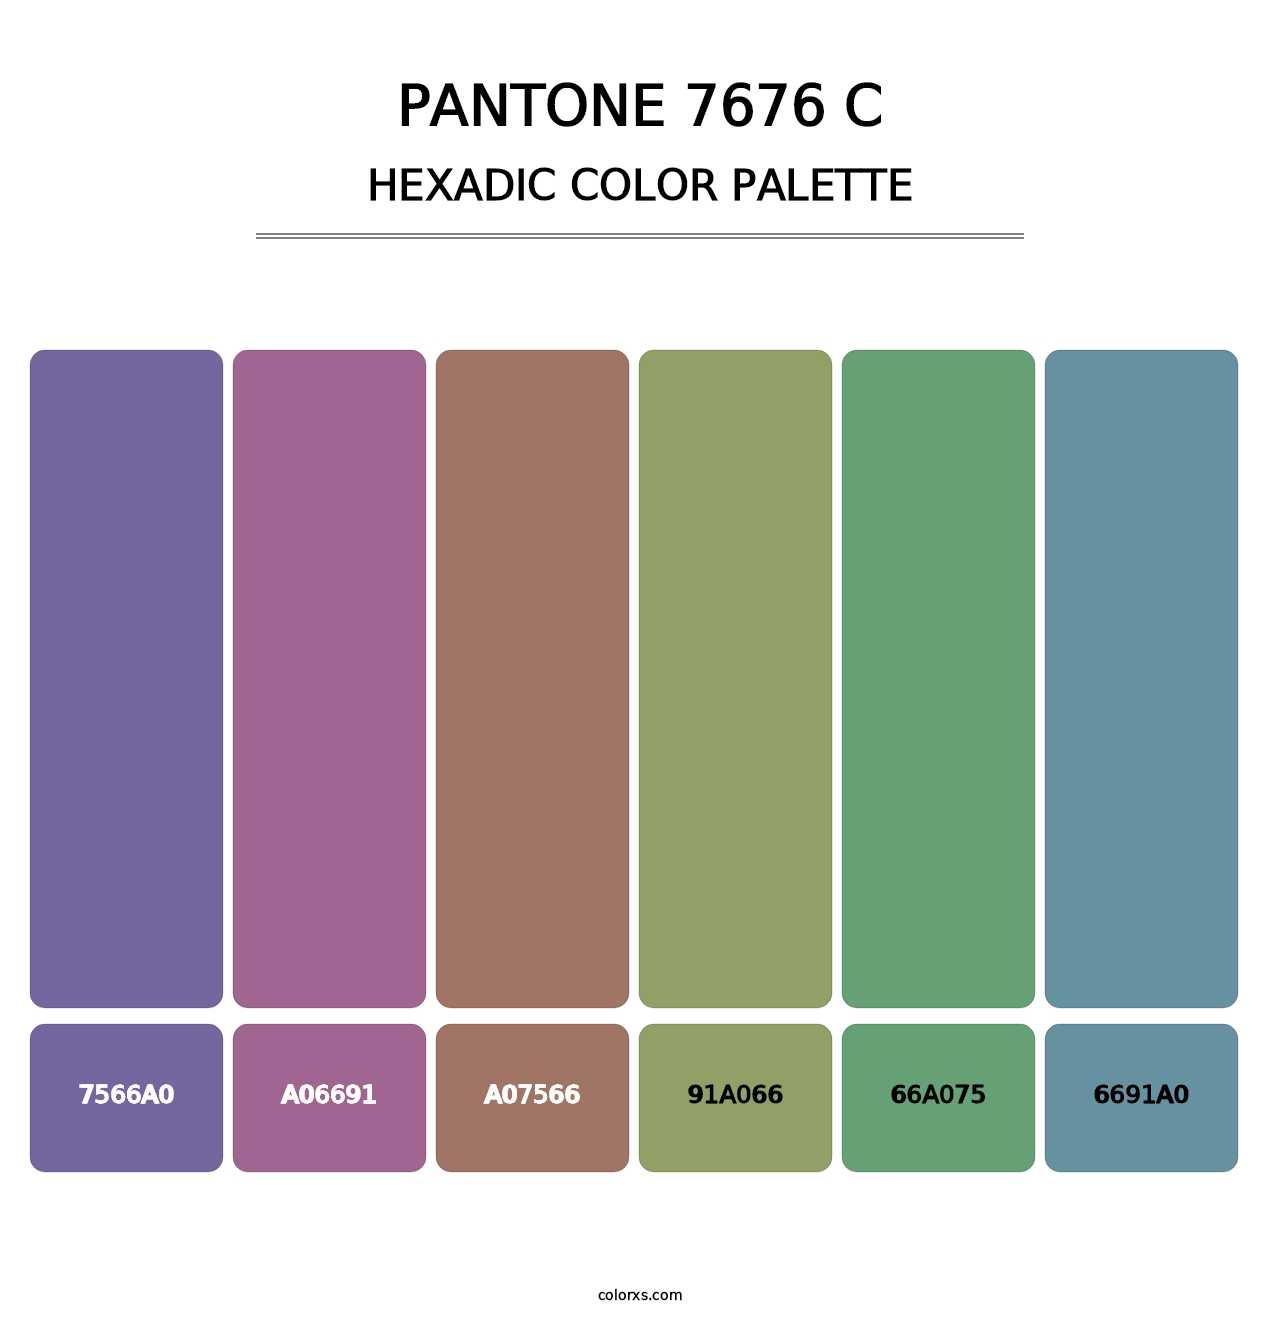 PANTONE 7676 C - Hexadic Color Palette